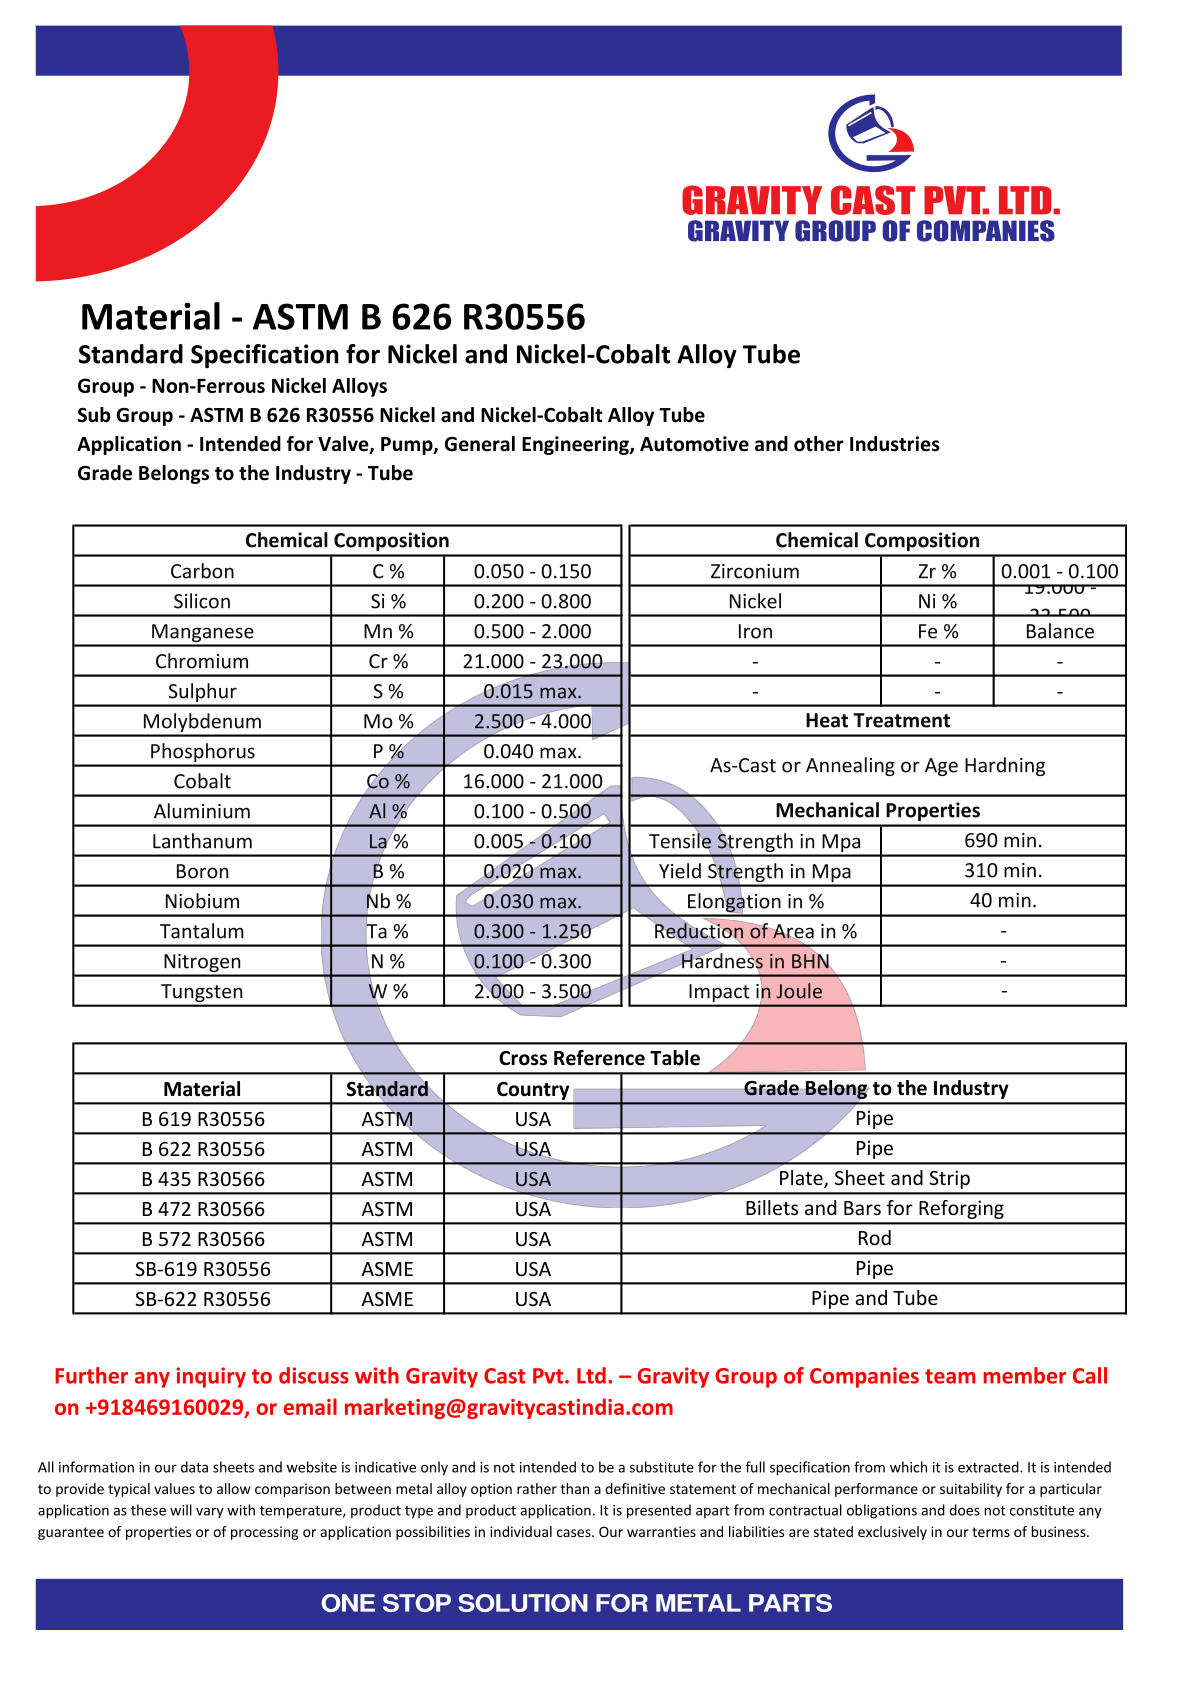 ASTM B 626 R30556.pdf